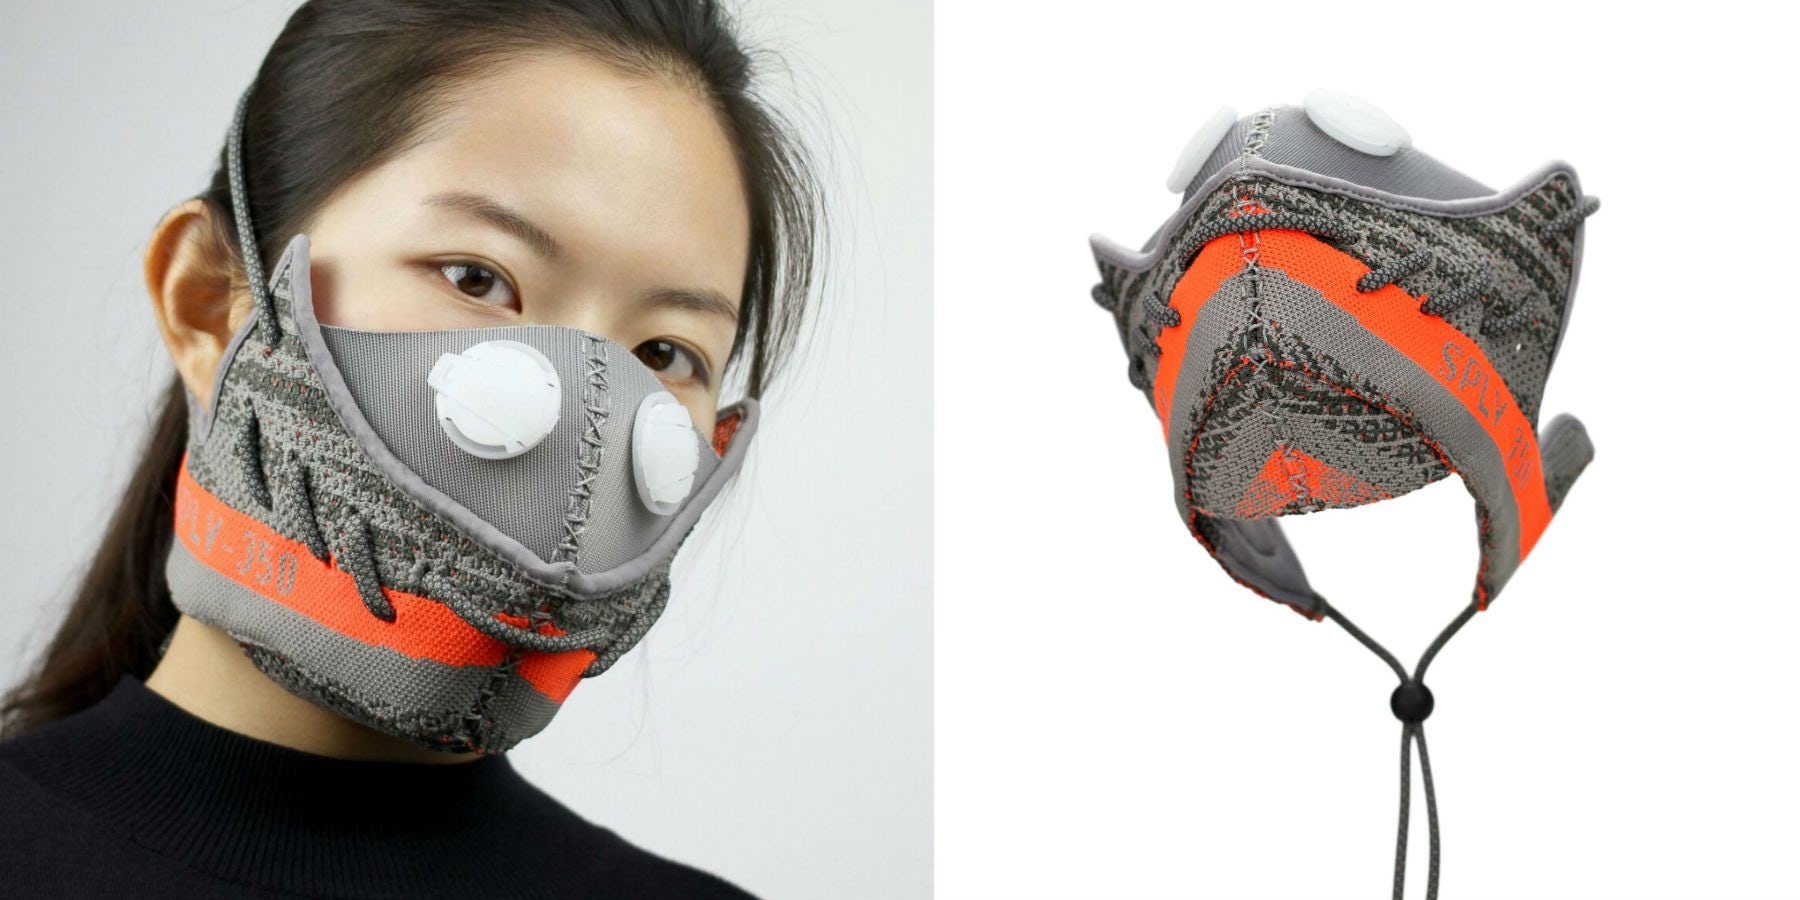 Meet Zhijun Wang, the Designer Behind the Craze Over a $5,000 Yeezy Pollution Mask